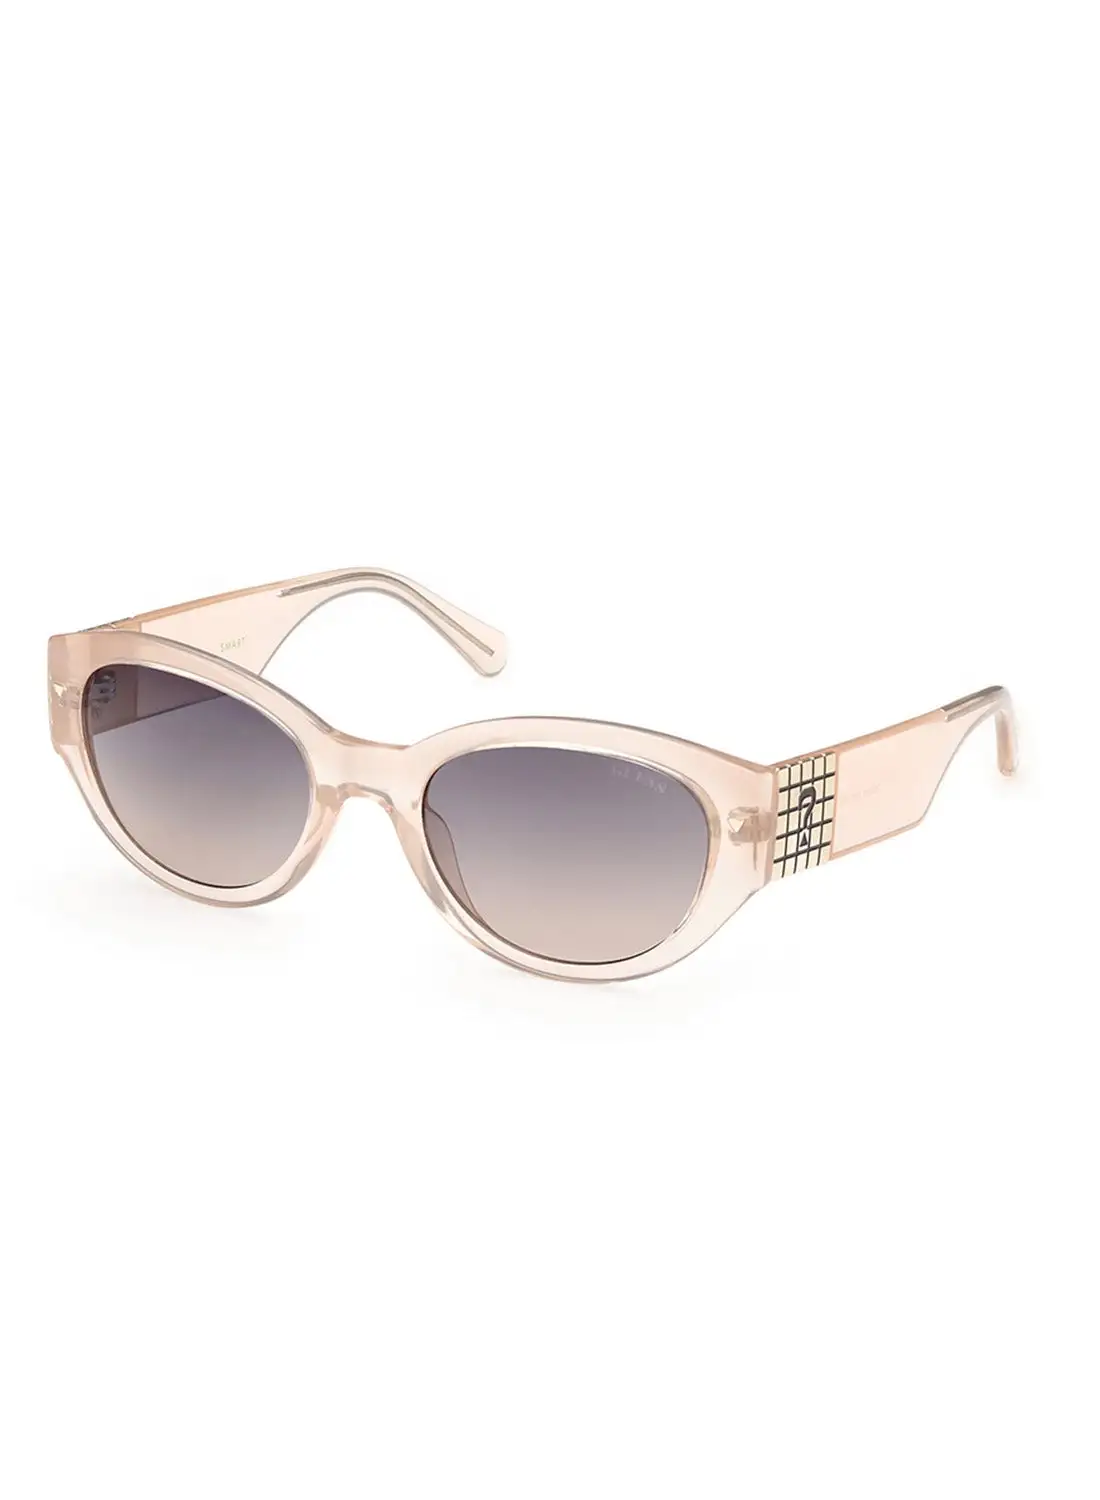 GUESS Women's UV Protection Oval Shape Sunglasses - GU824157B55 - Lens Size: 55 Mm